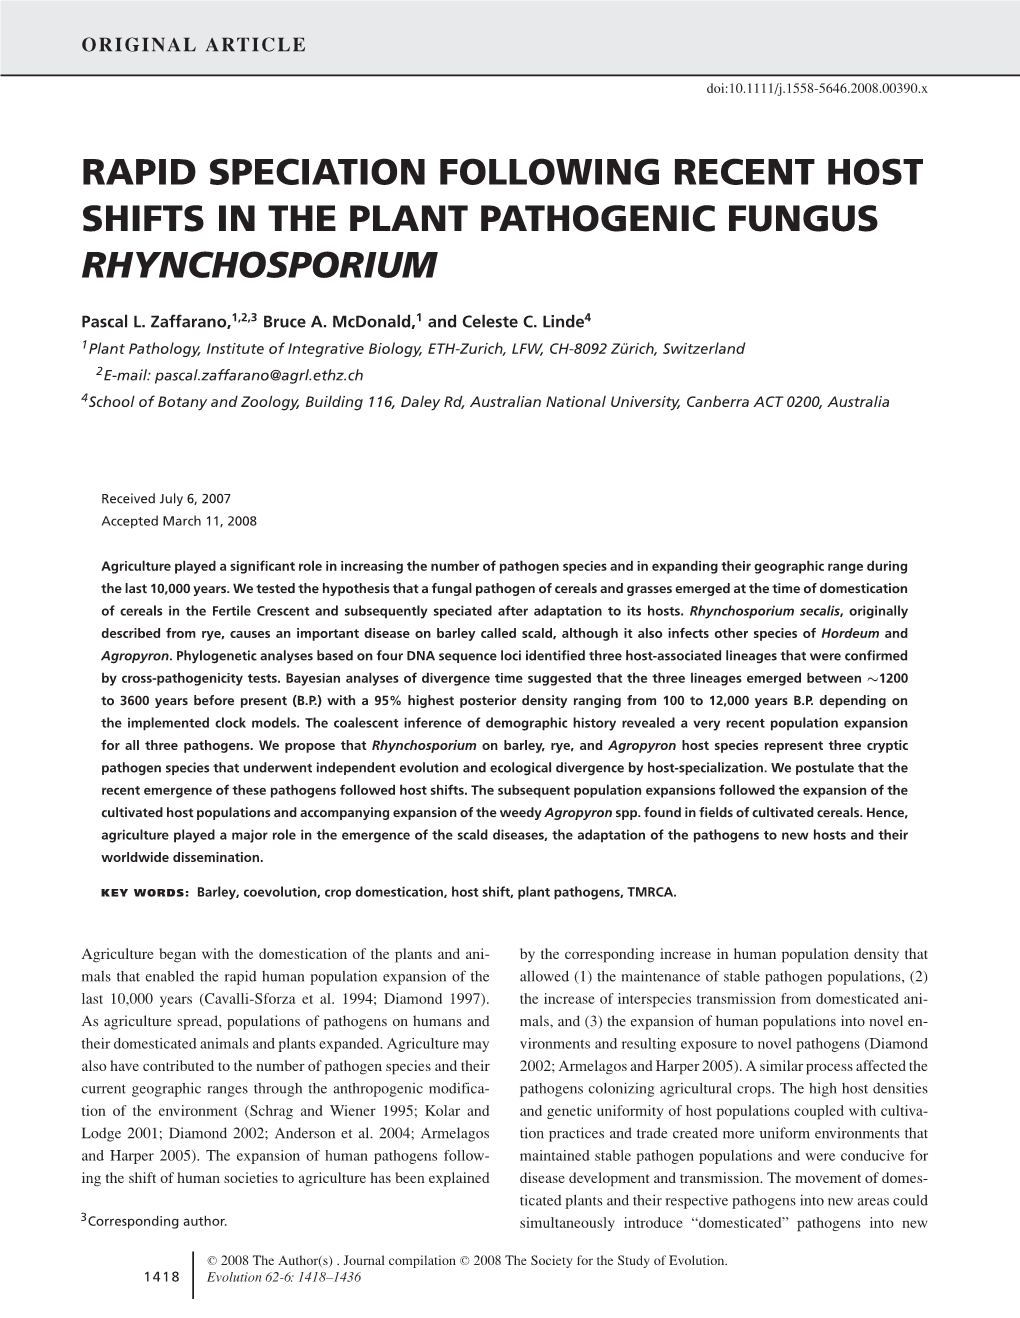 Rapid Speciation Following Recent Host Shifts in the Plant Pathogenic Fungus Rhynchosporium